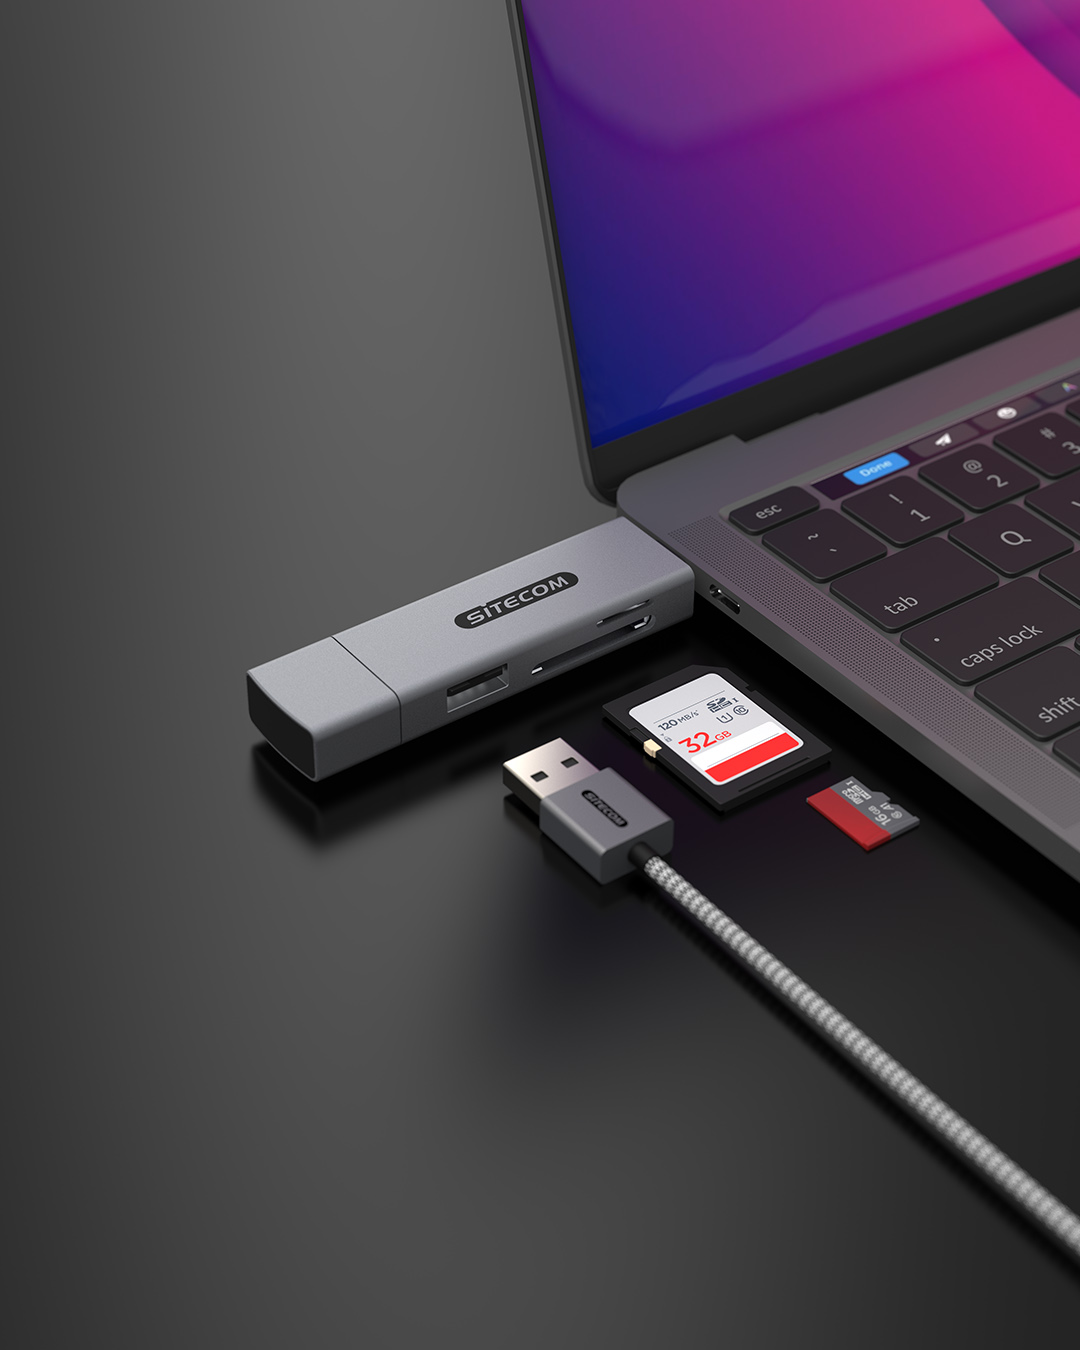 Sitecom USB-A + USB-C Stick Card Reader with USB Port